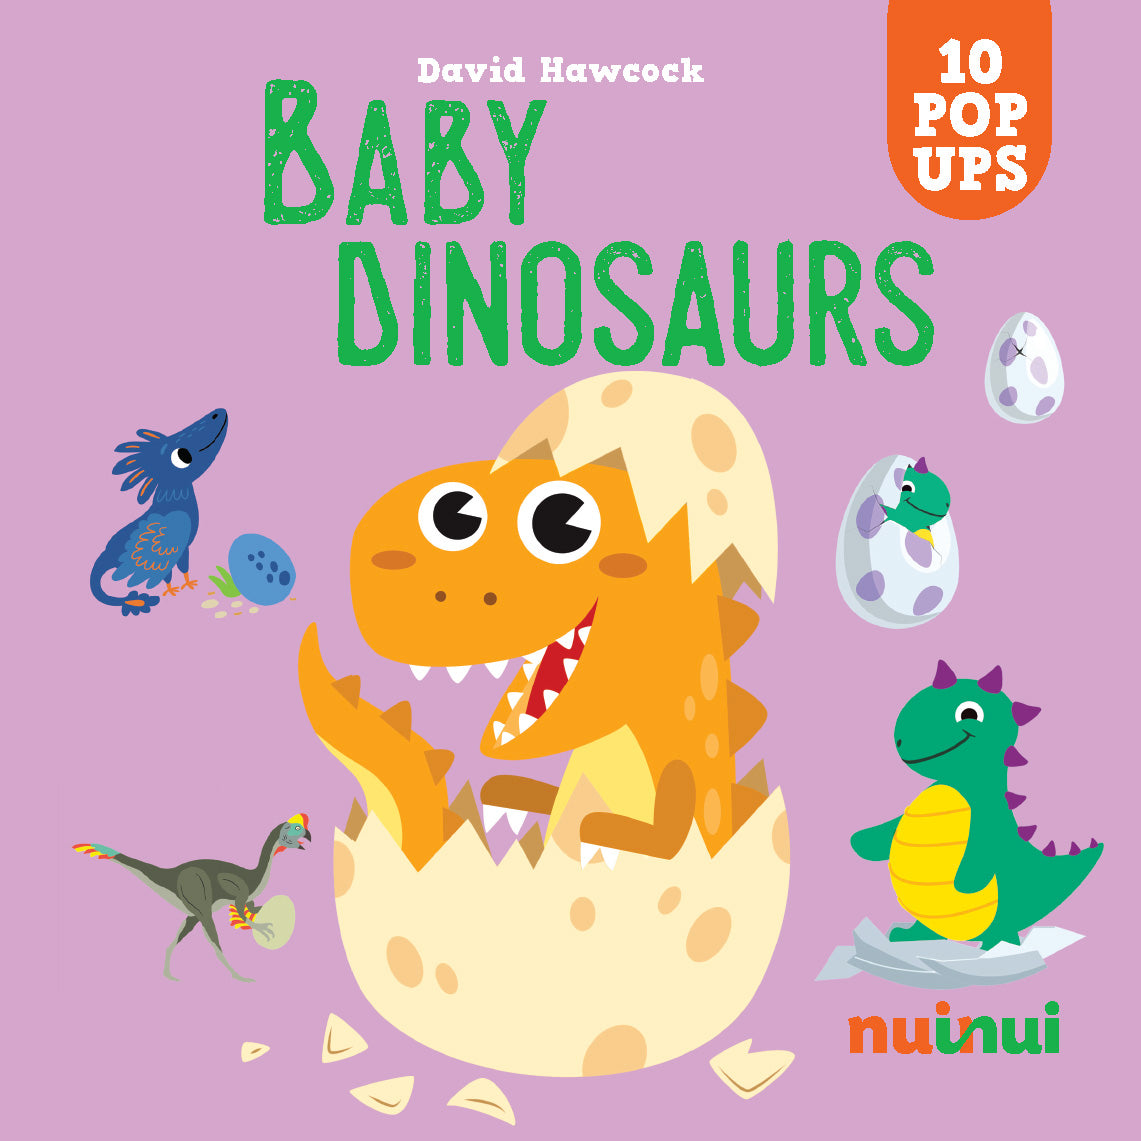 Amazing pop-ups - Baby dinosaurs